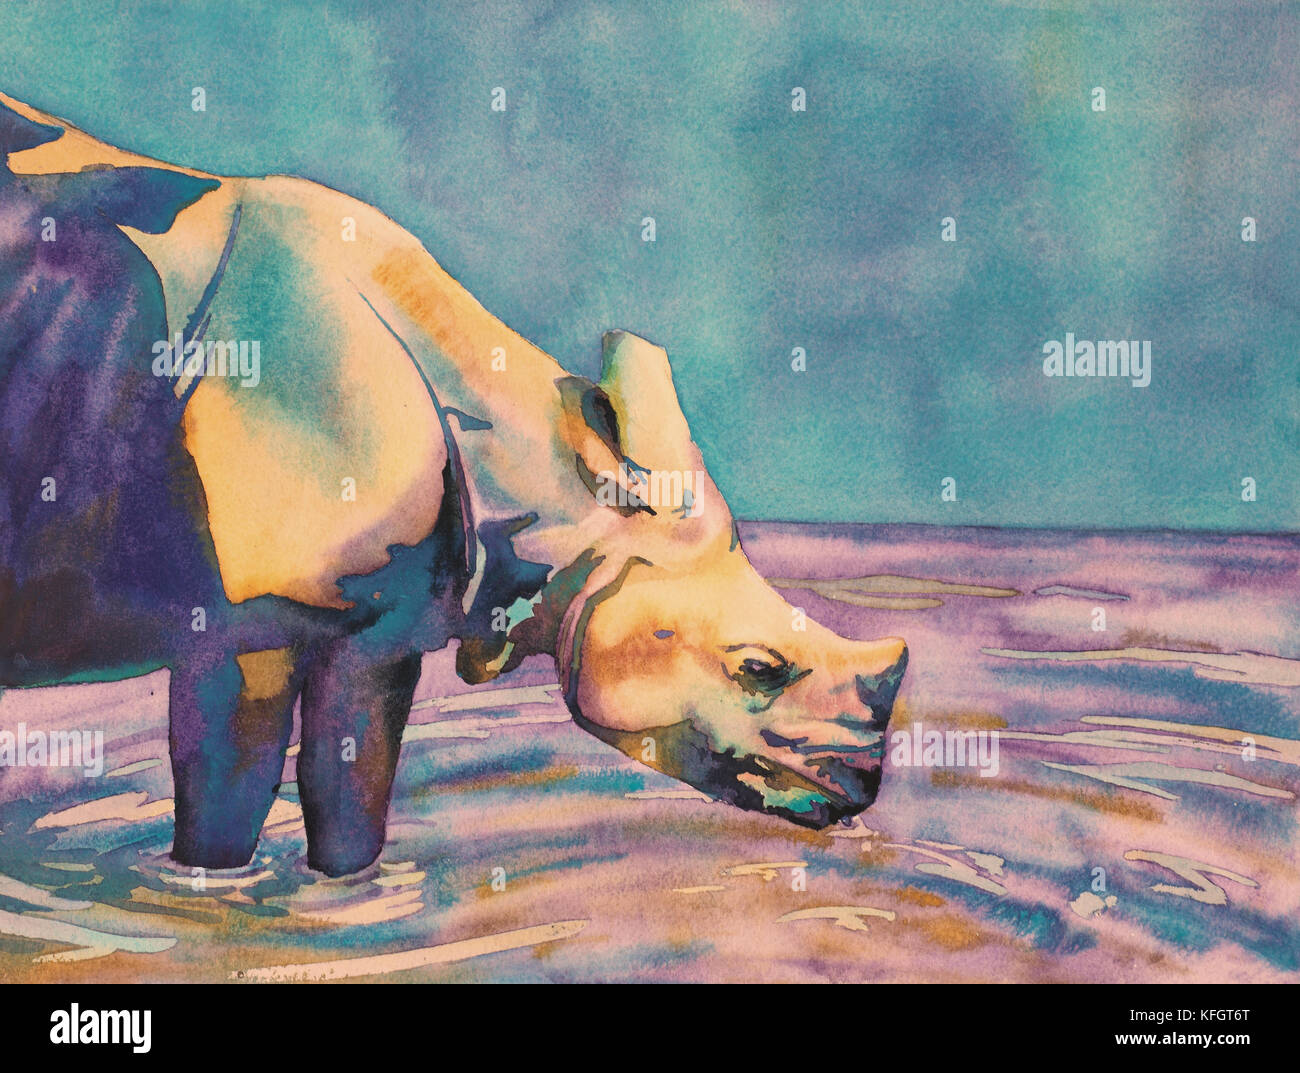 Fine art watercolor batik painting of rhinoceroses drinking water. Stock Photo